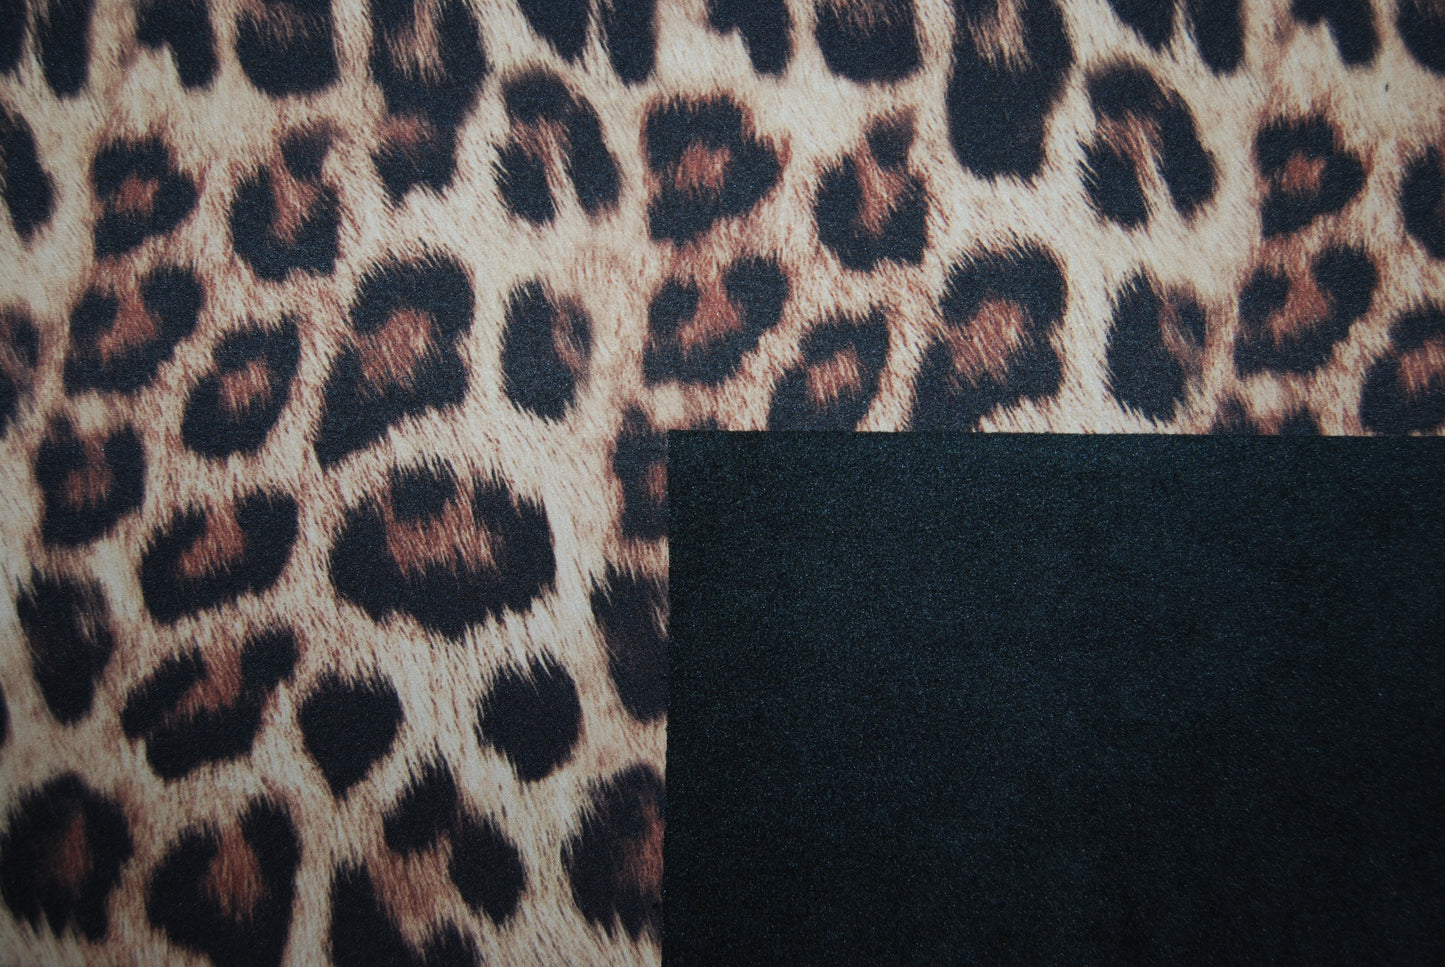 Softshell leopard